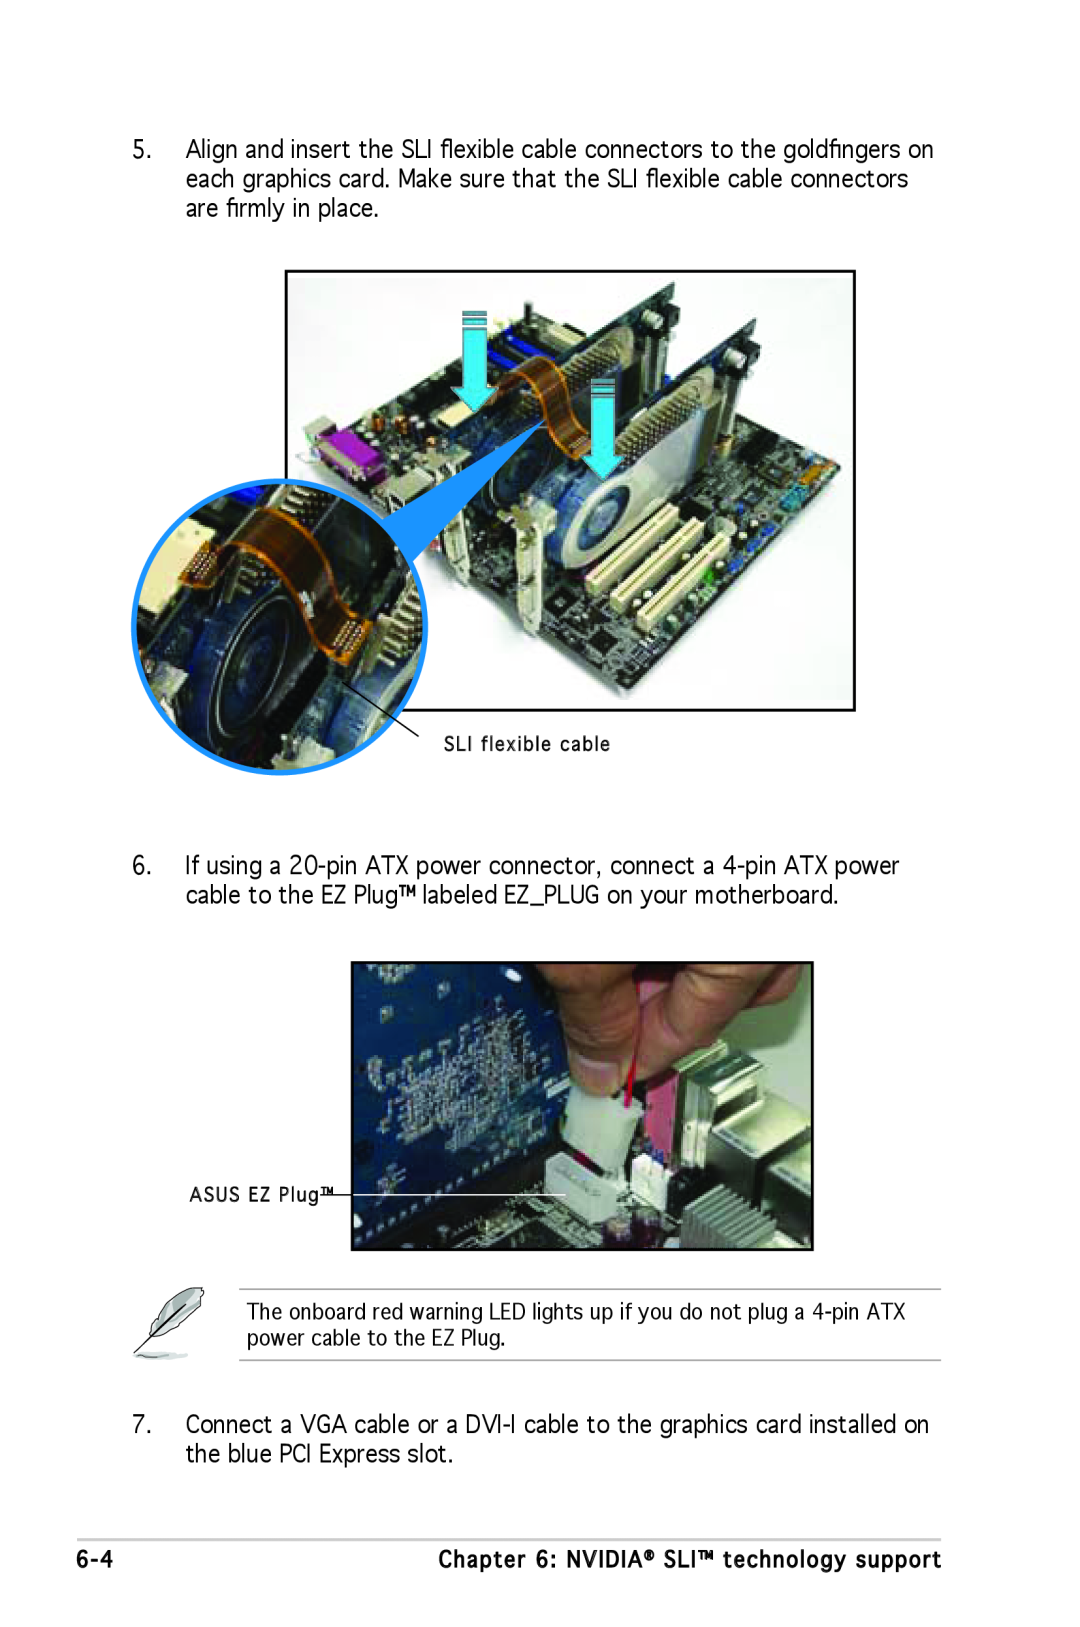 Asus A8N-SLI SE manual SLI flexible cable, ASUS EZ Plug 